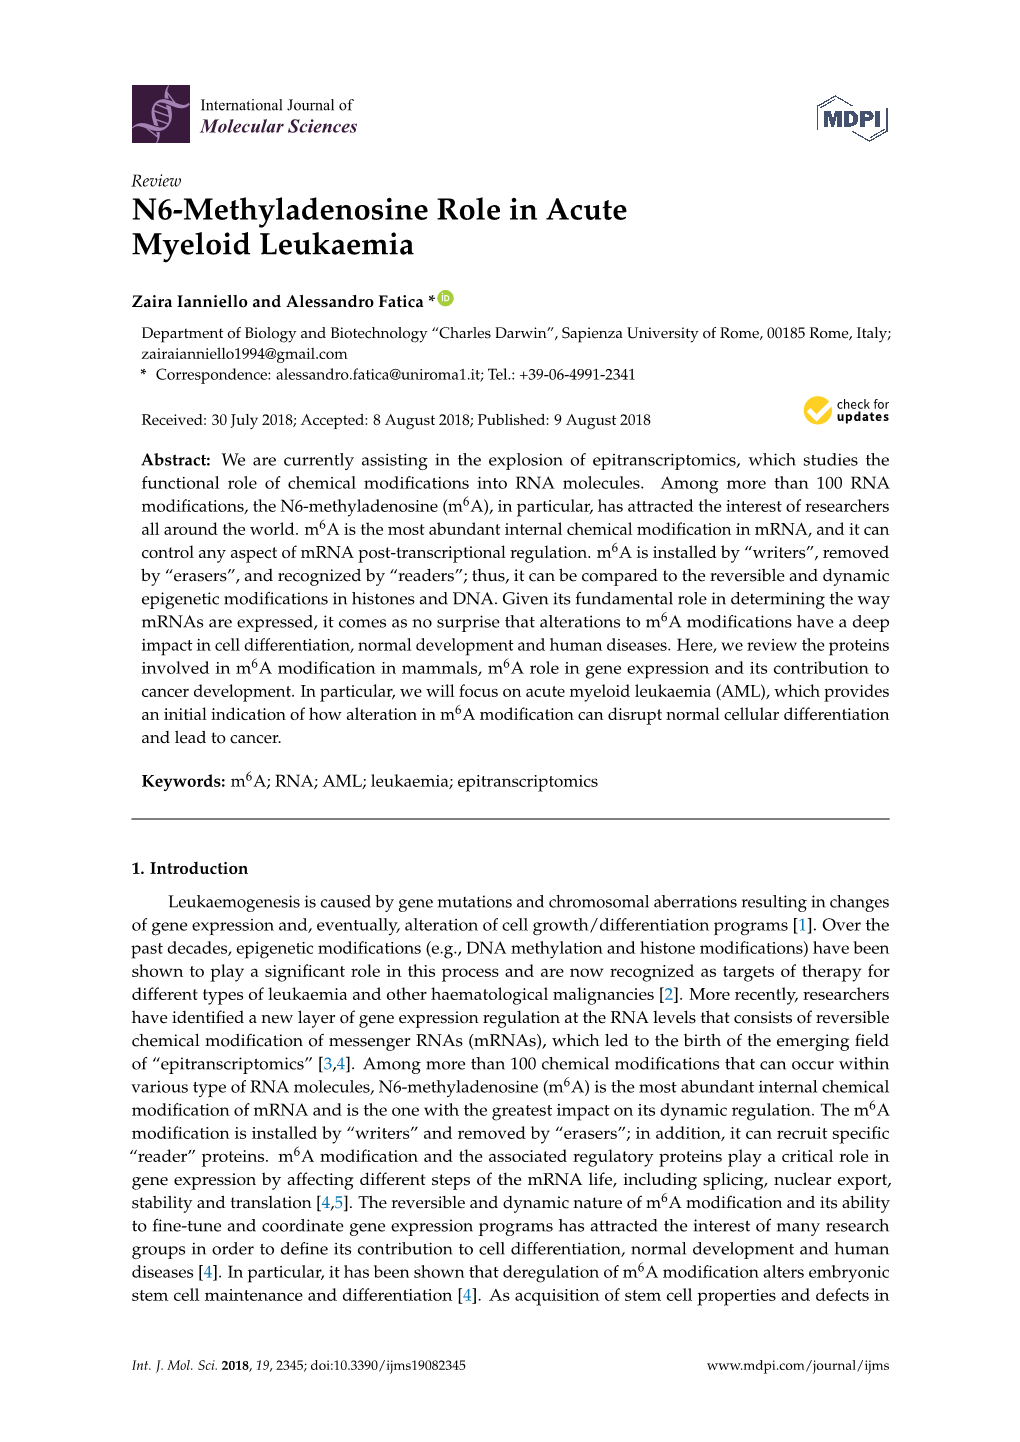 N6-Methyladenosine Role in Acute Myeloid Leukaemia